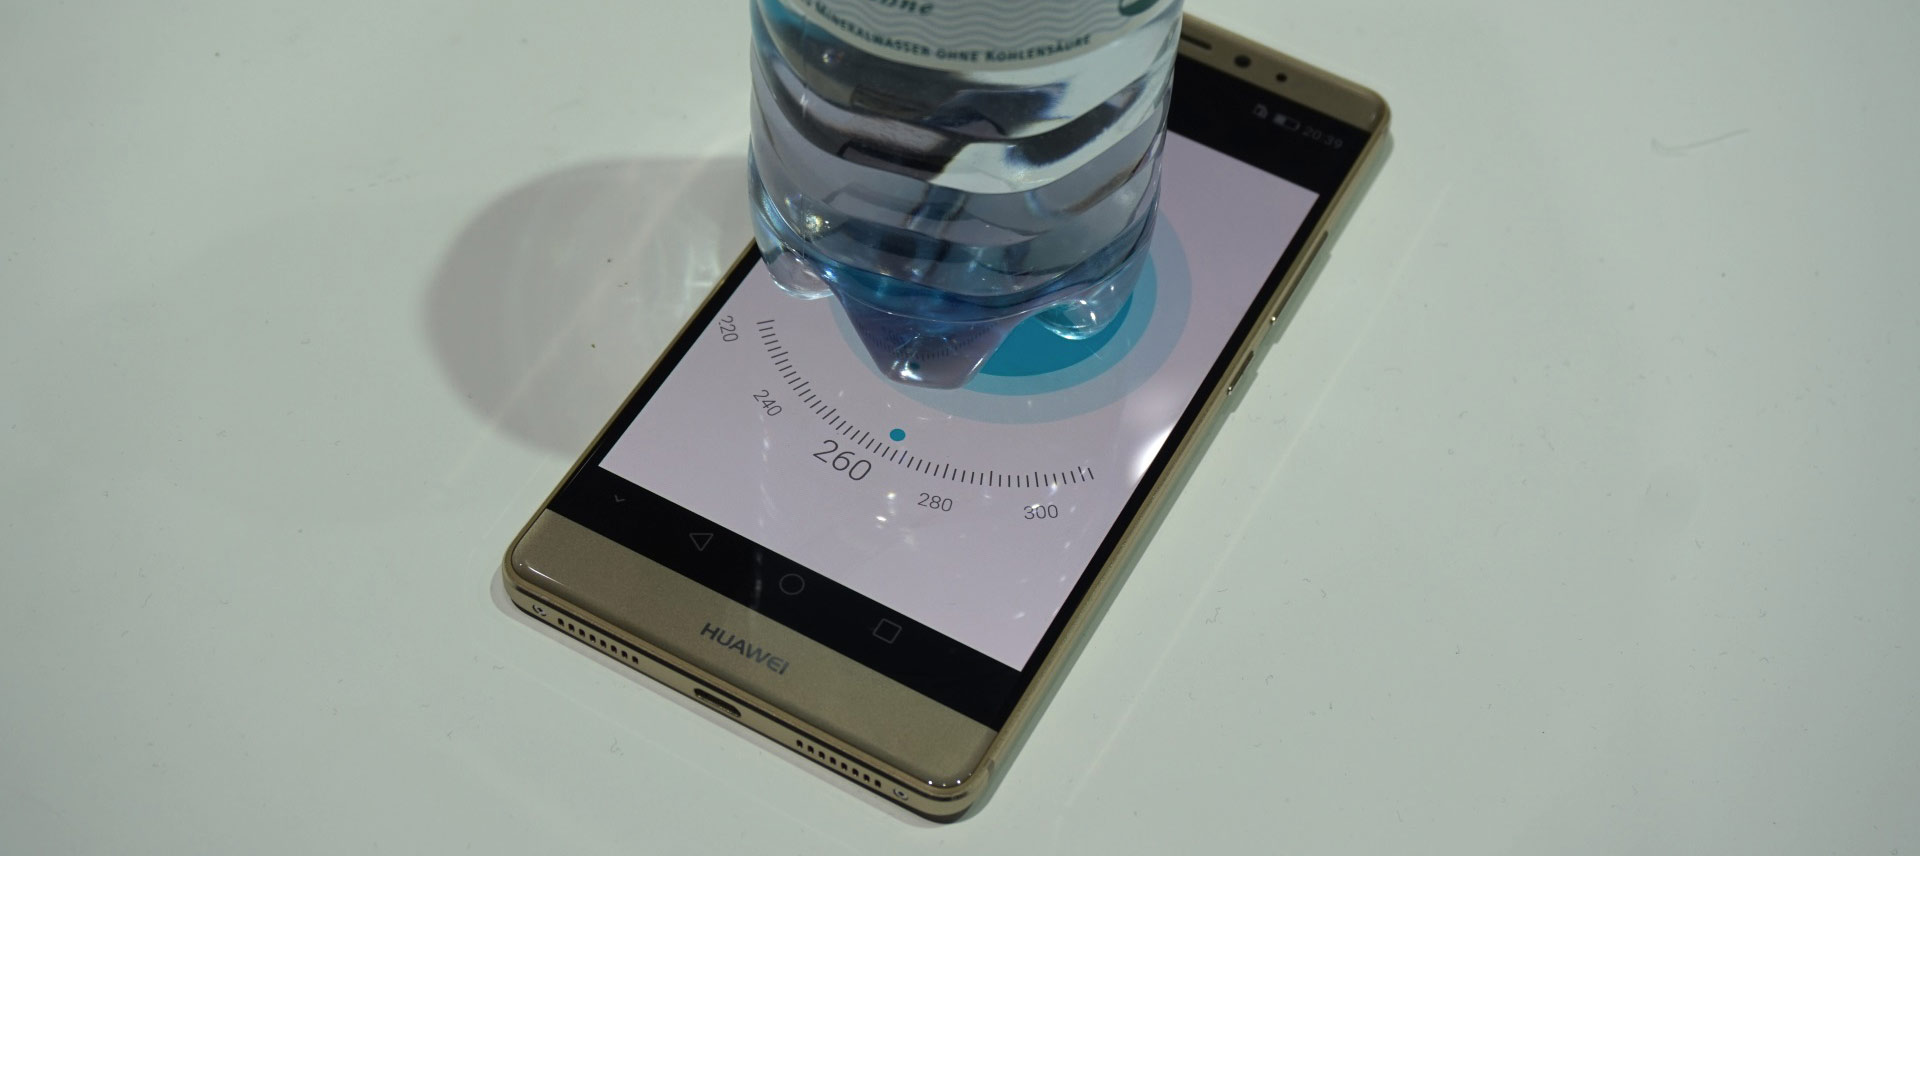 El Huawei Mate S aprovecha su pantalla Force Touch para pesar objetos entre 100 y 400 gramos